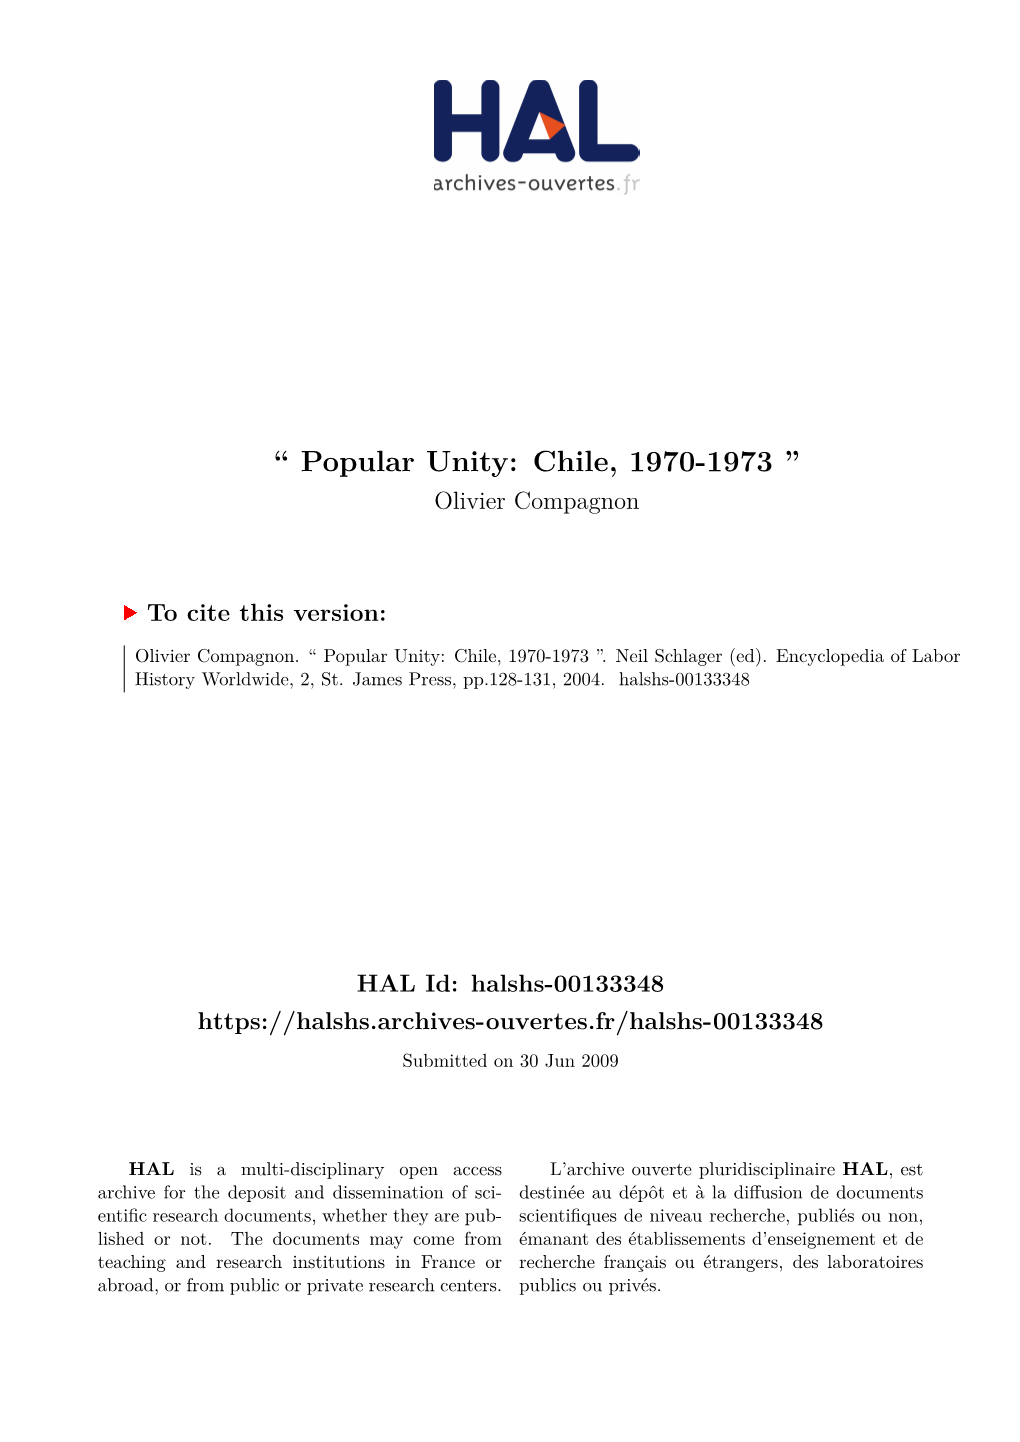 `` Popular Unity: Chile, 1970-1973 ''